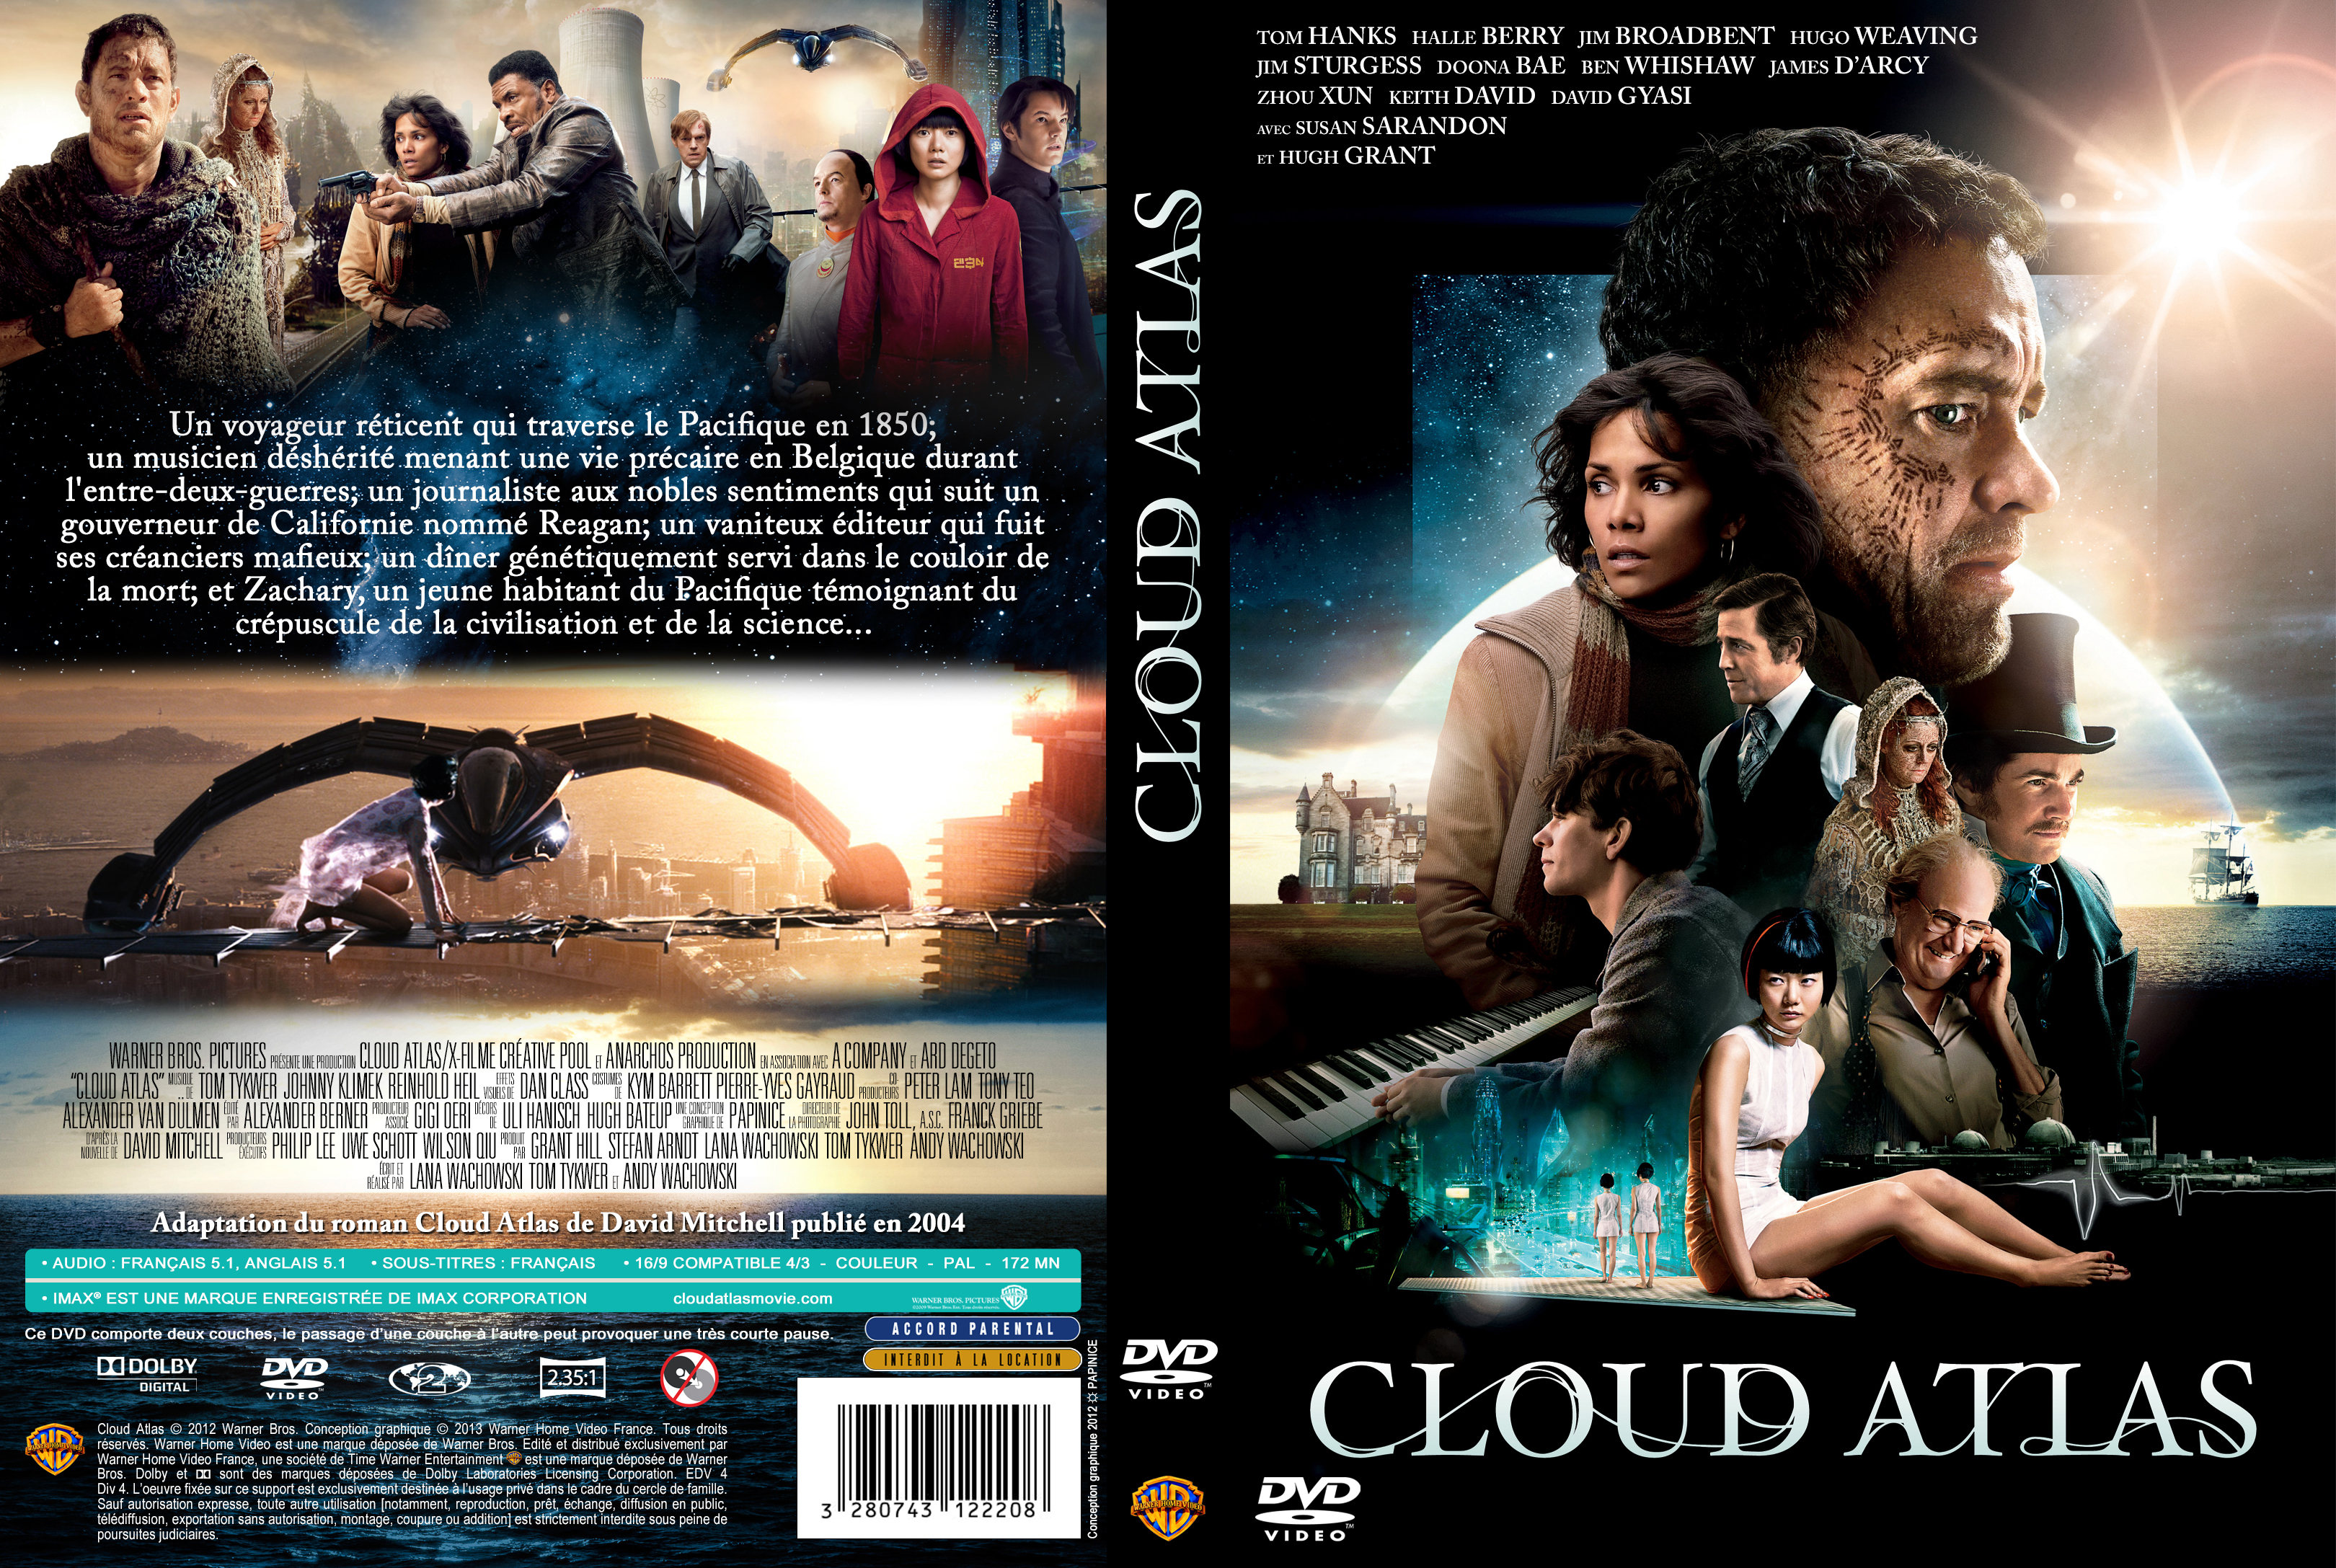 Jaquette DVD Cloud Atlas custom